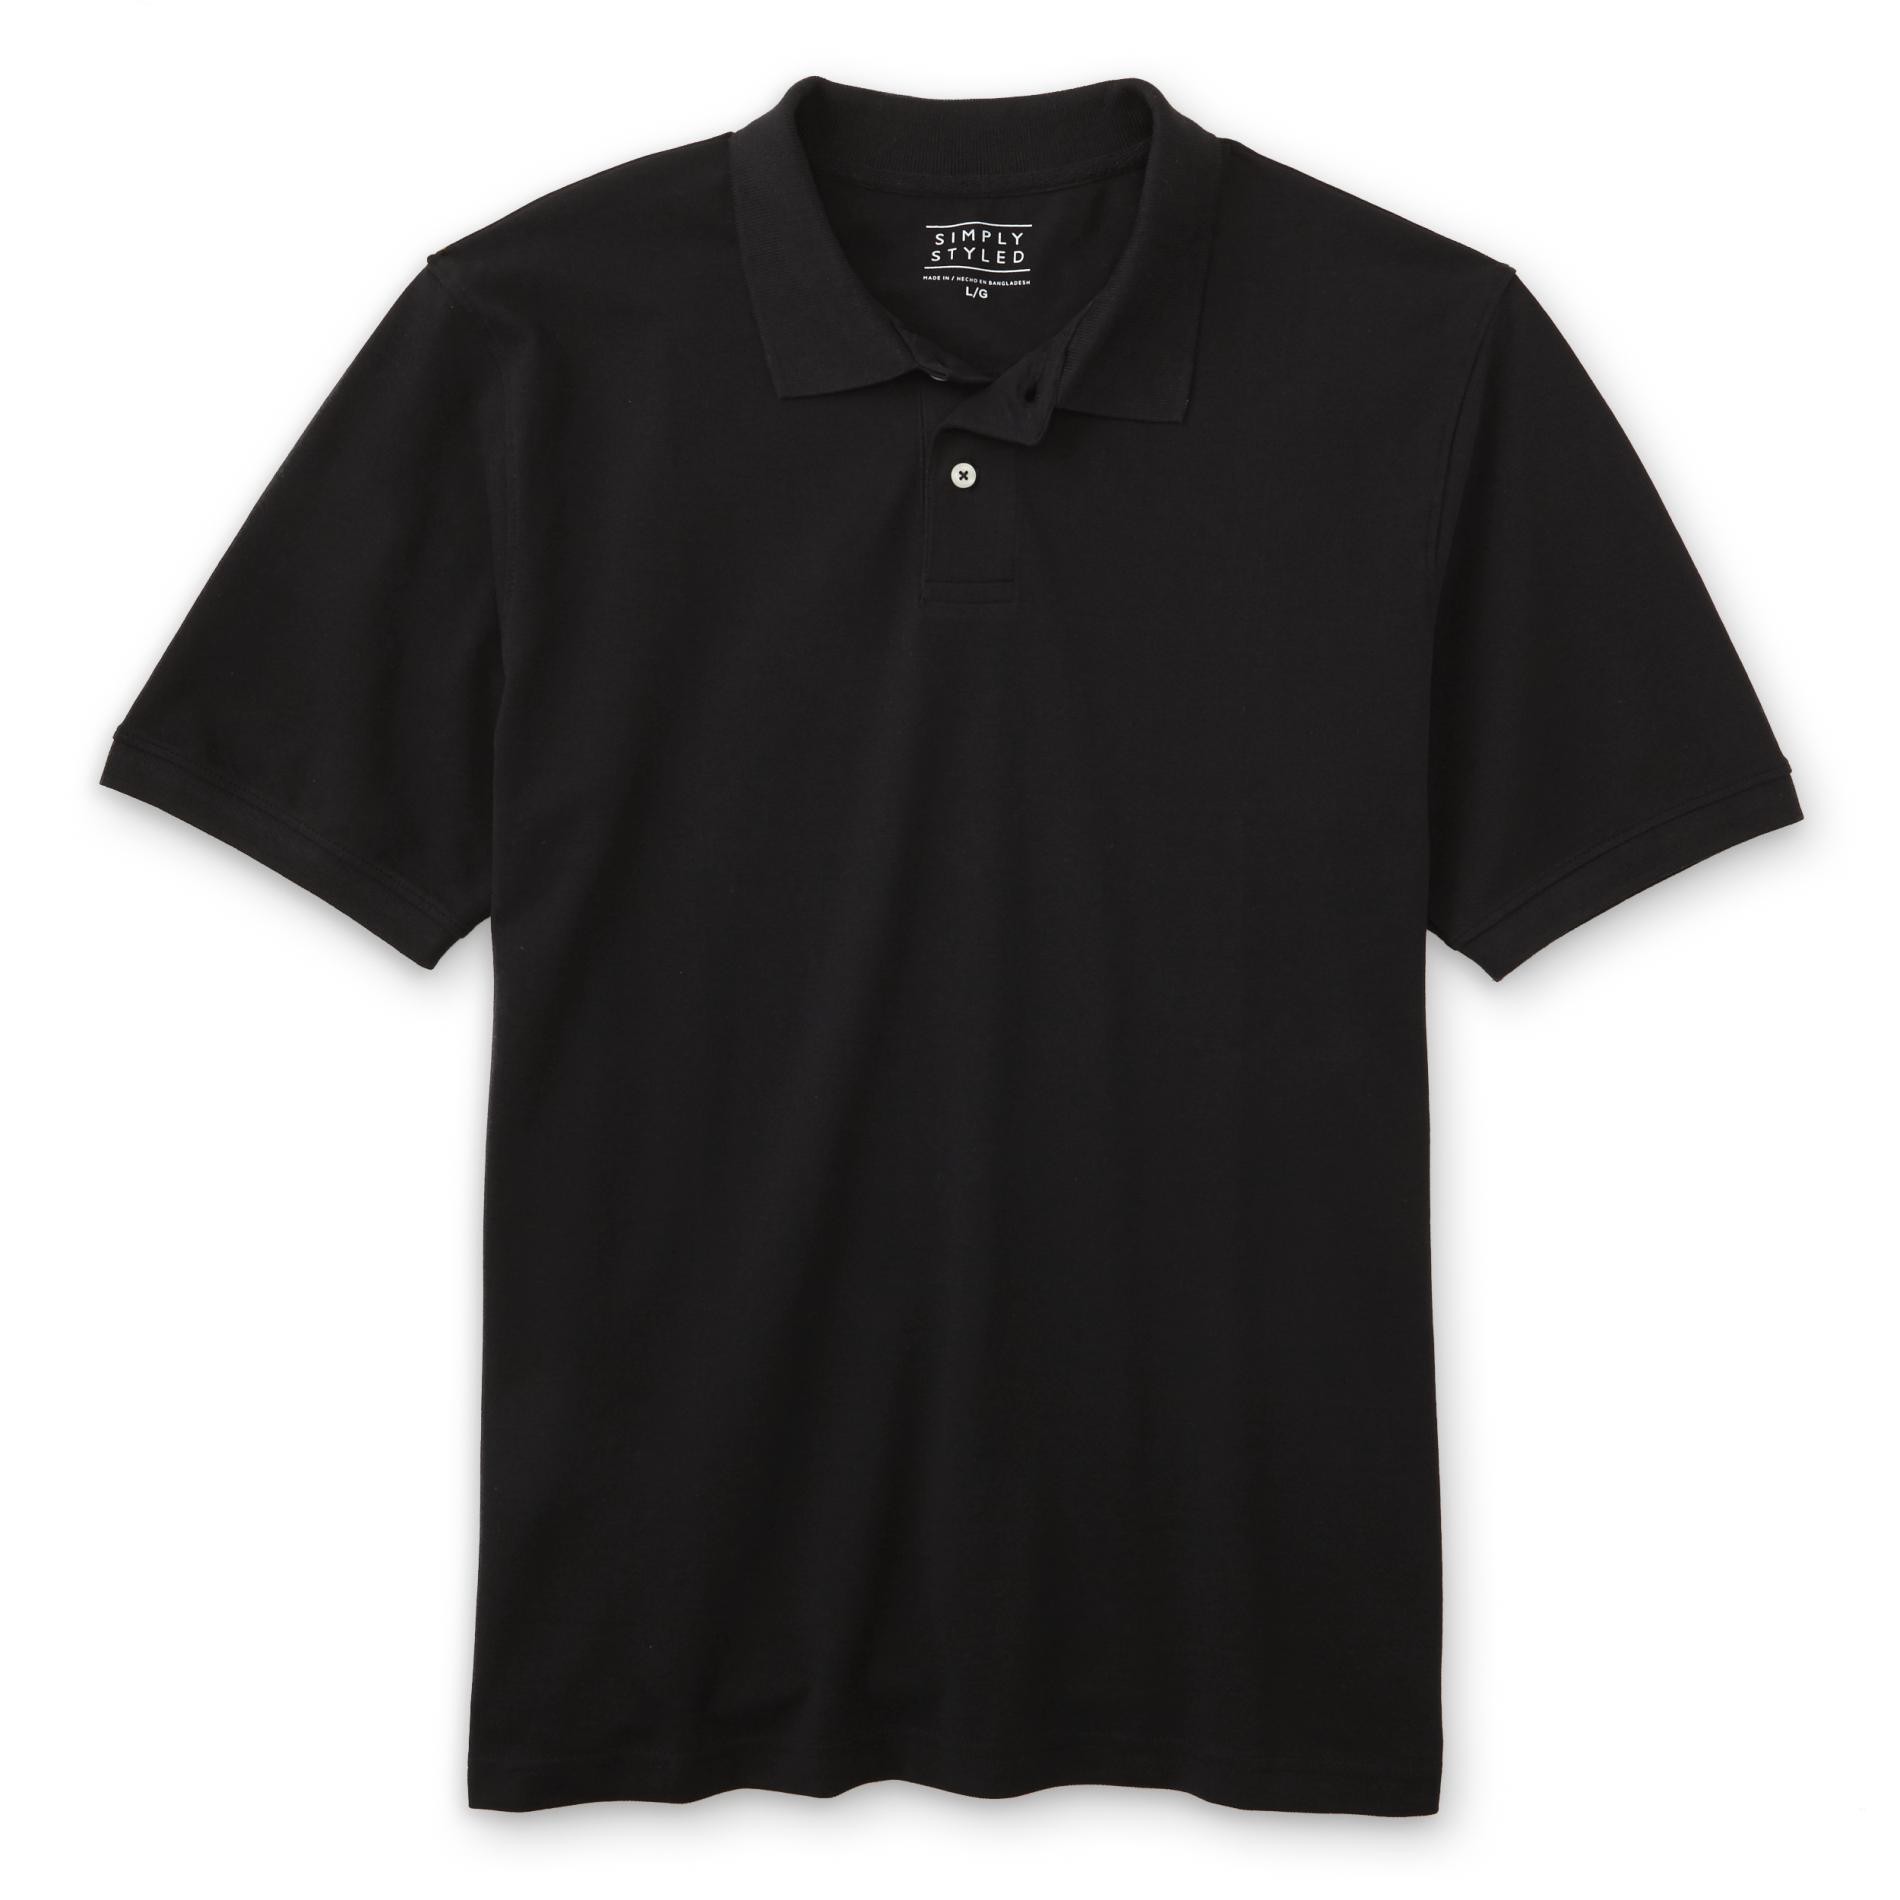 Simply Styled Men's Pique Polo Shirt